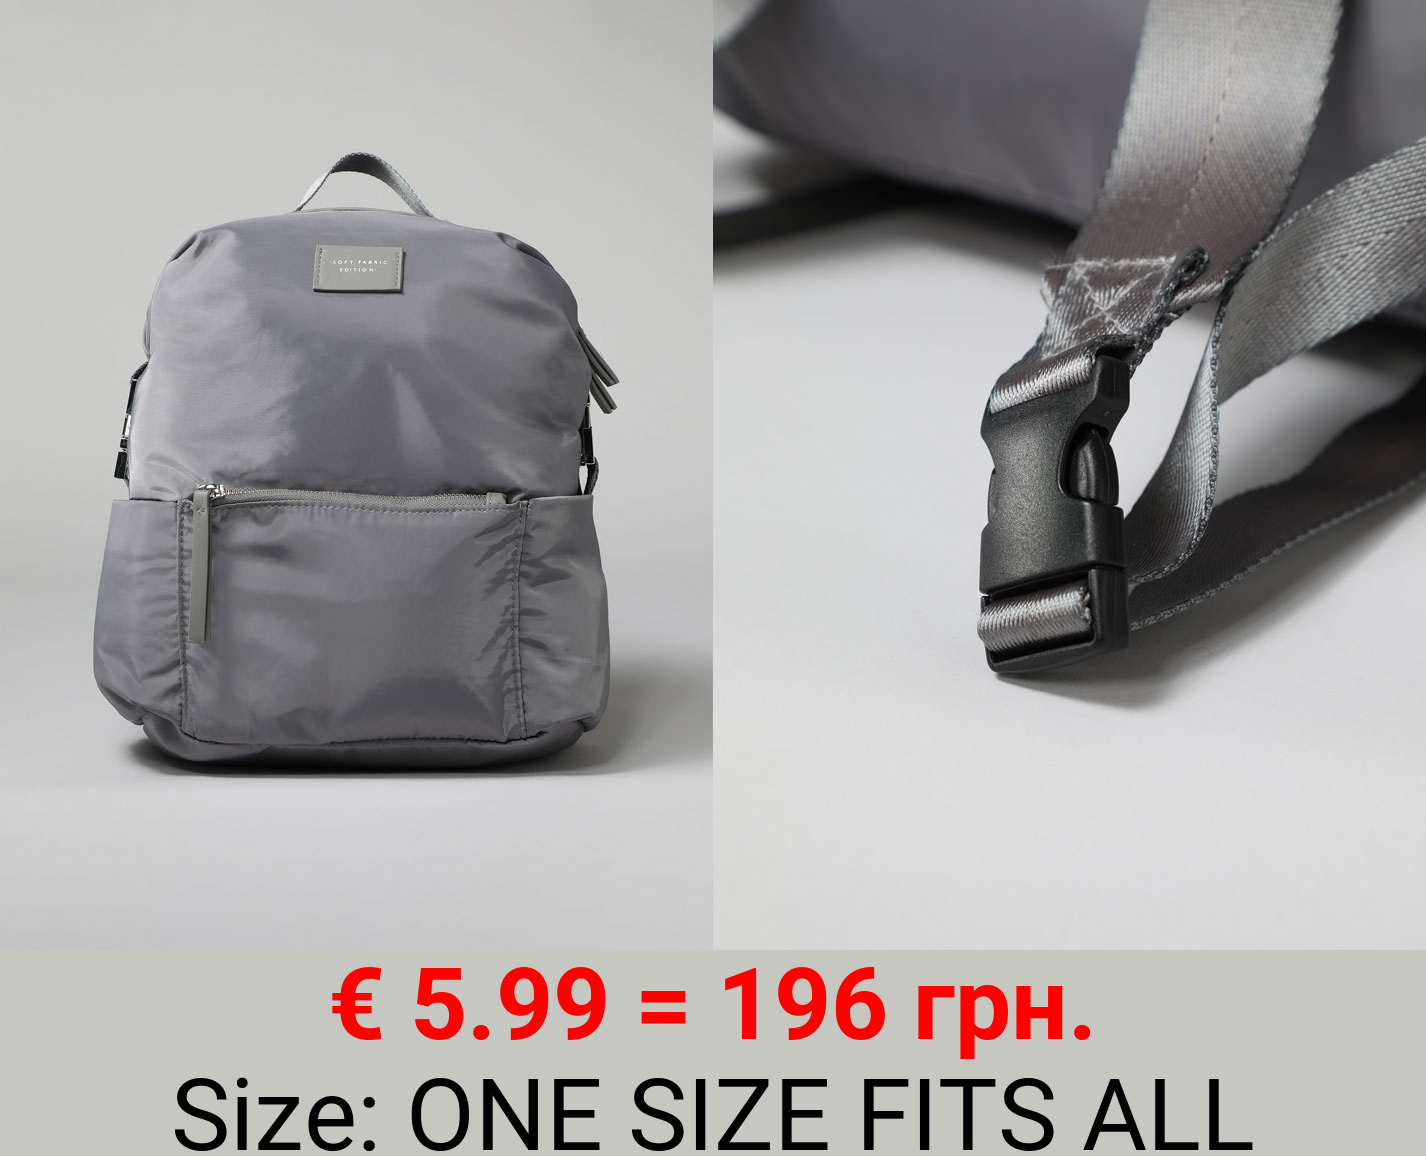 Basic nylon backpack